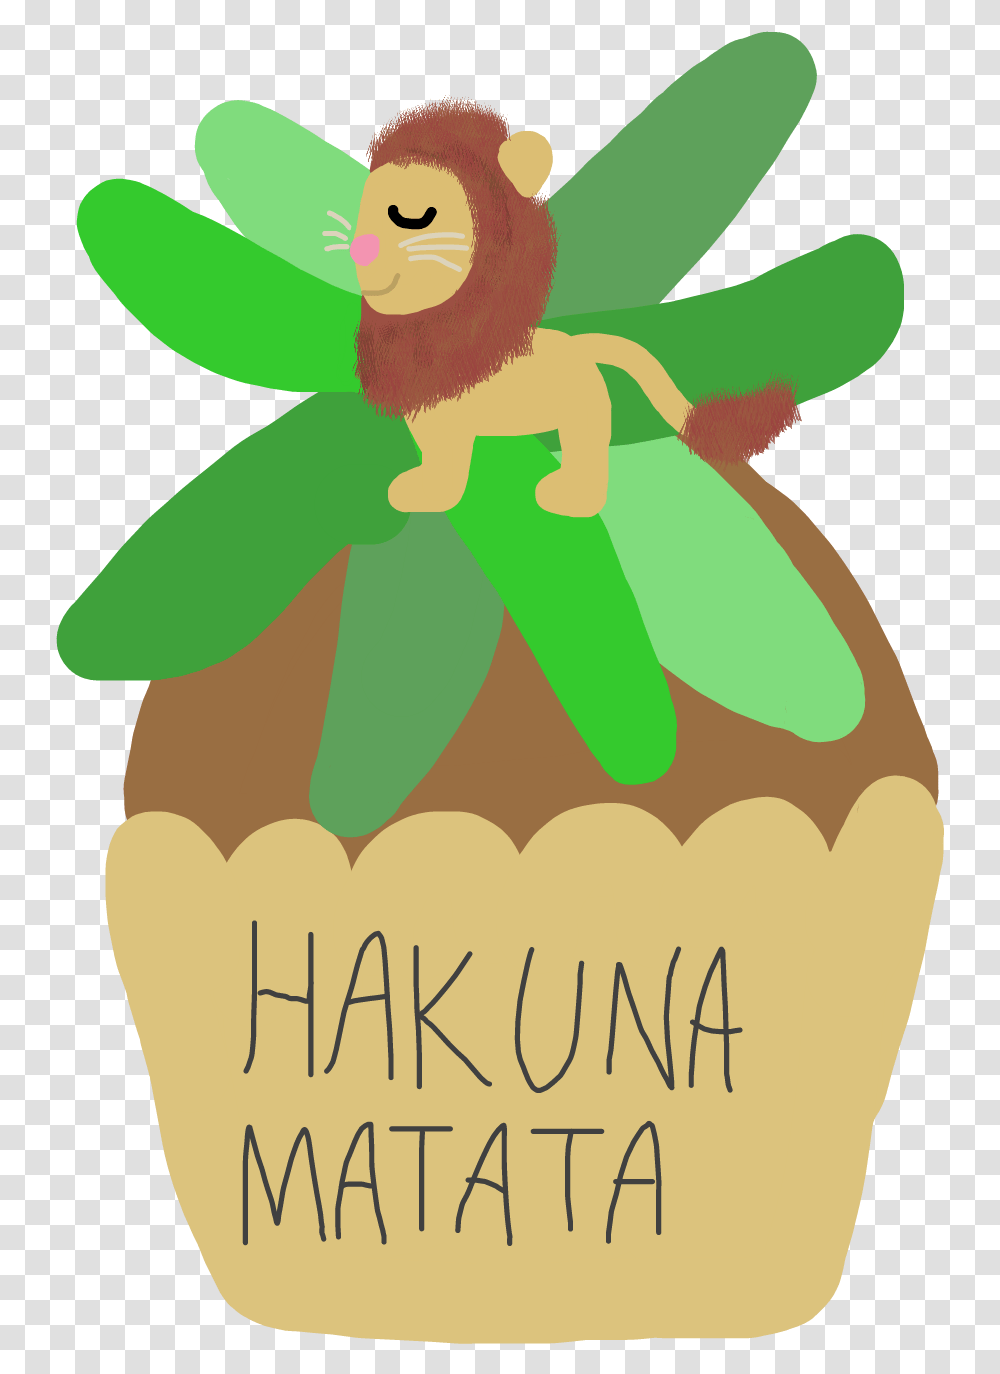 What A Wonderful Phrase Hakuna Matata Cupcake Illustration, Plant, Food, Nature, Outdoors Transparent Png